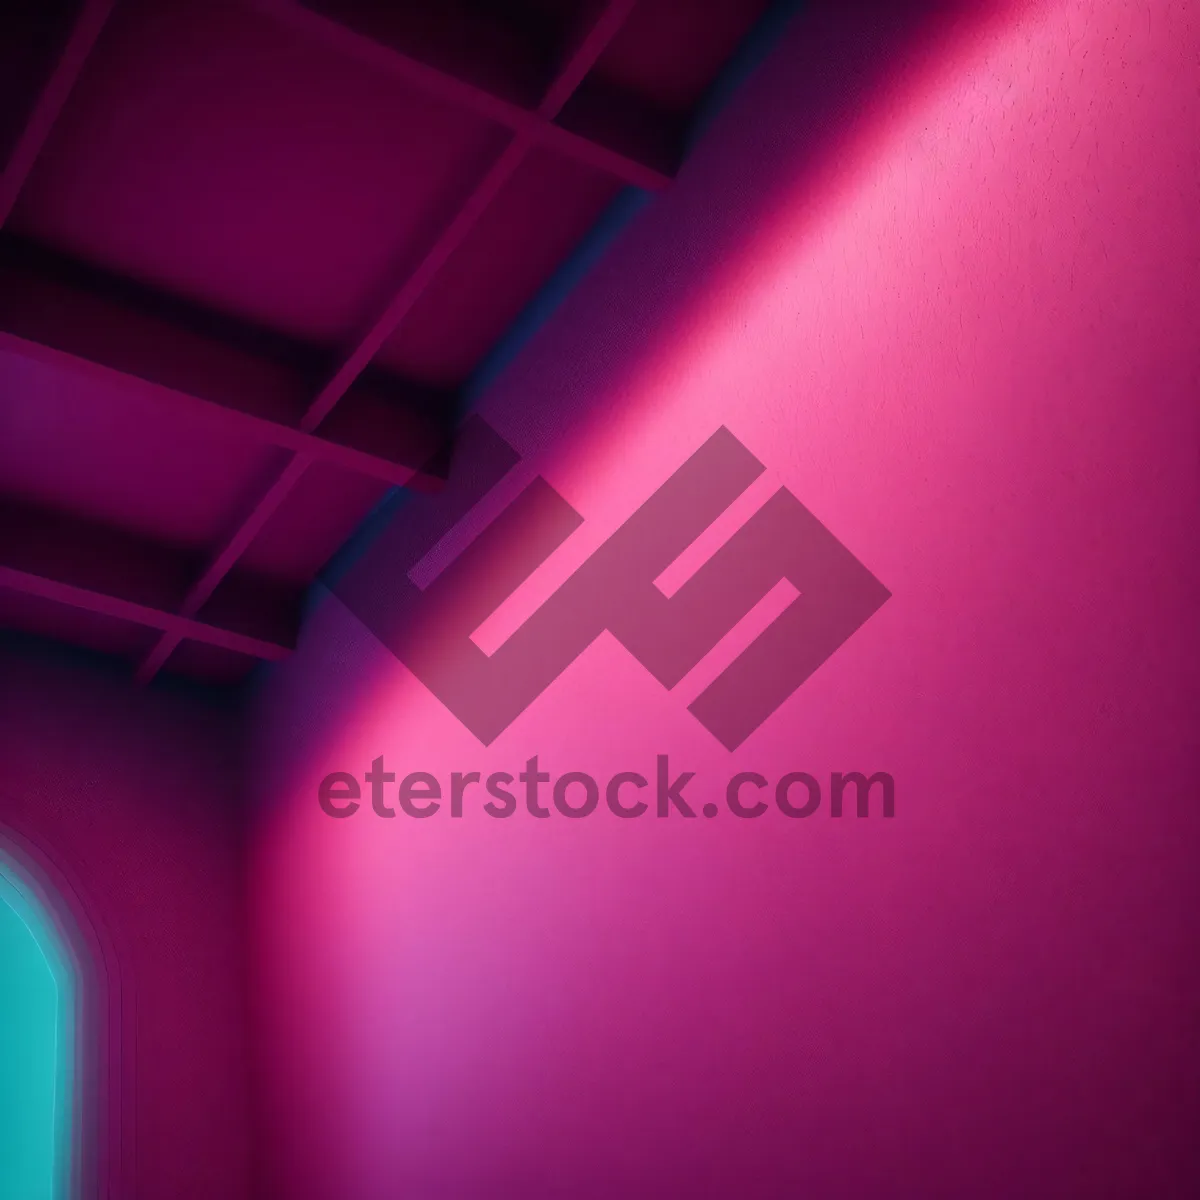 Picture of Vibrant Laser Light Artwork in Digital Space